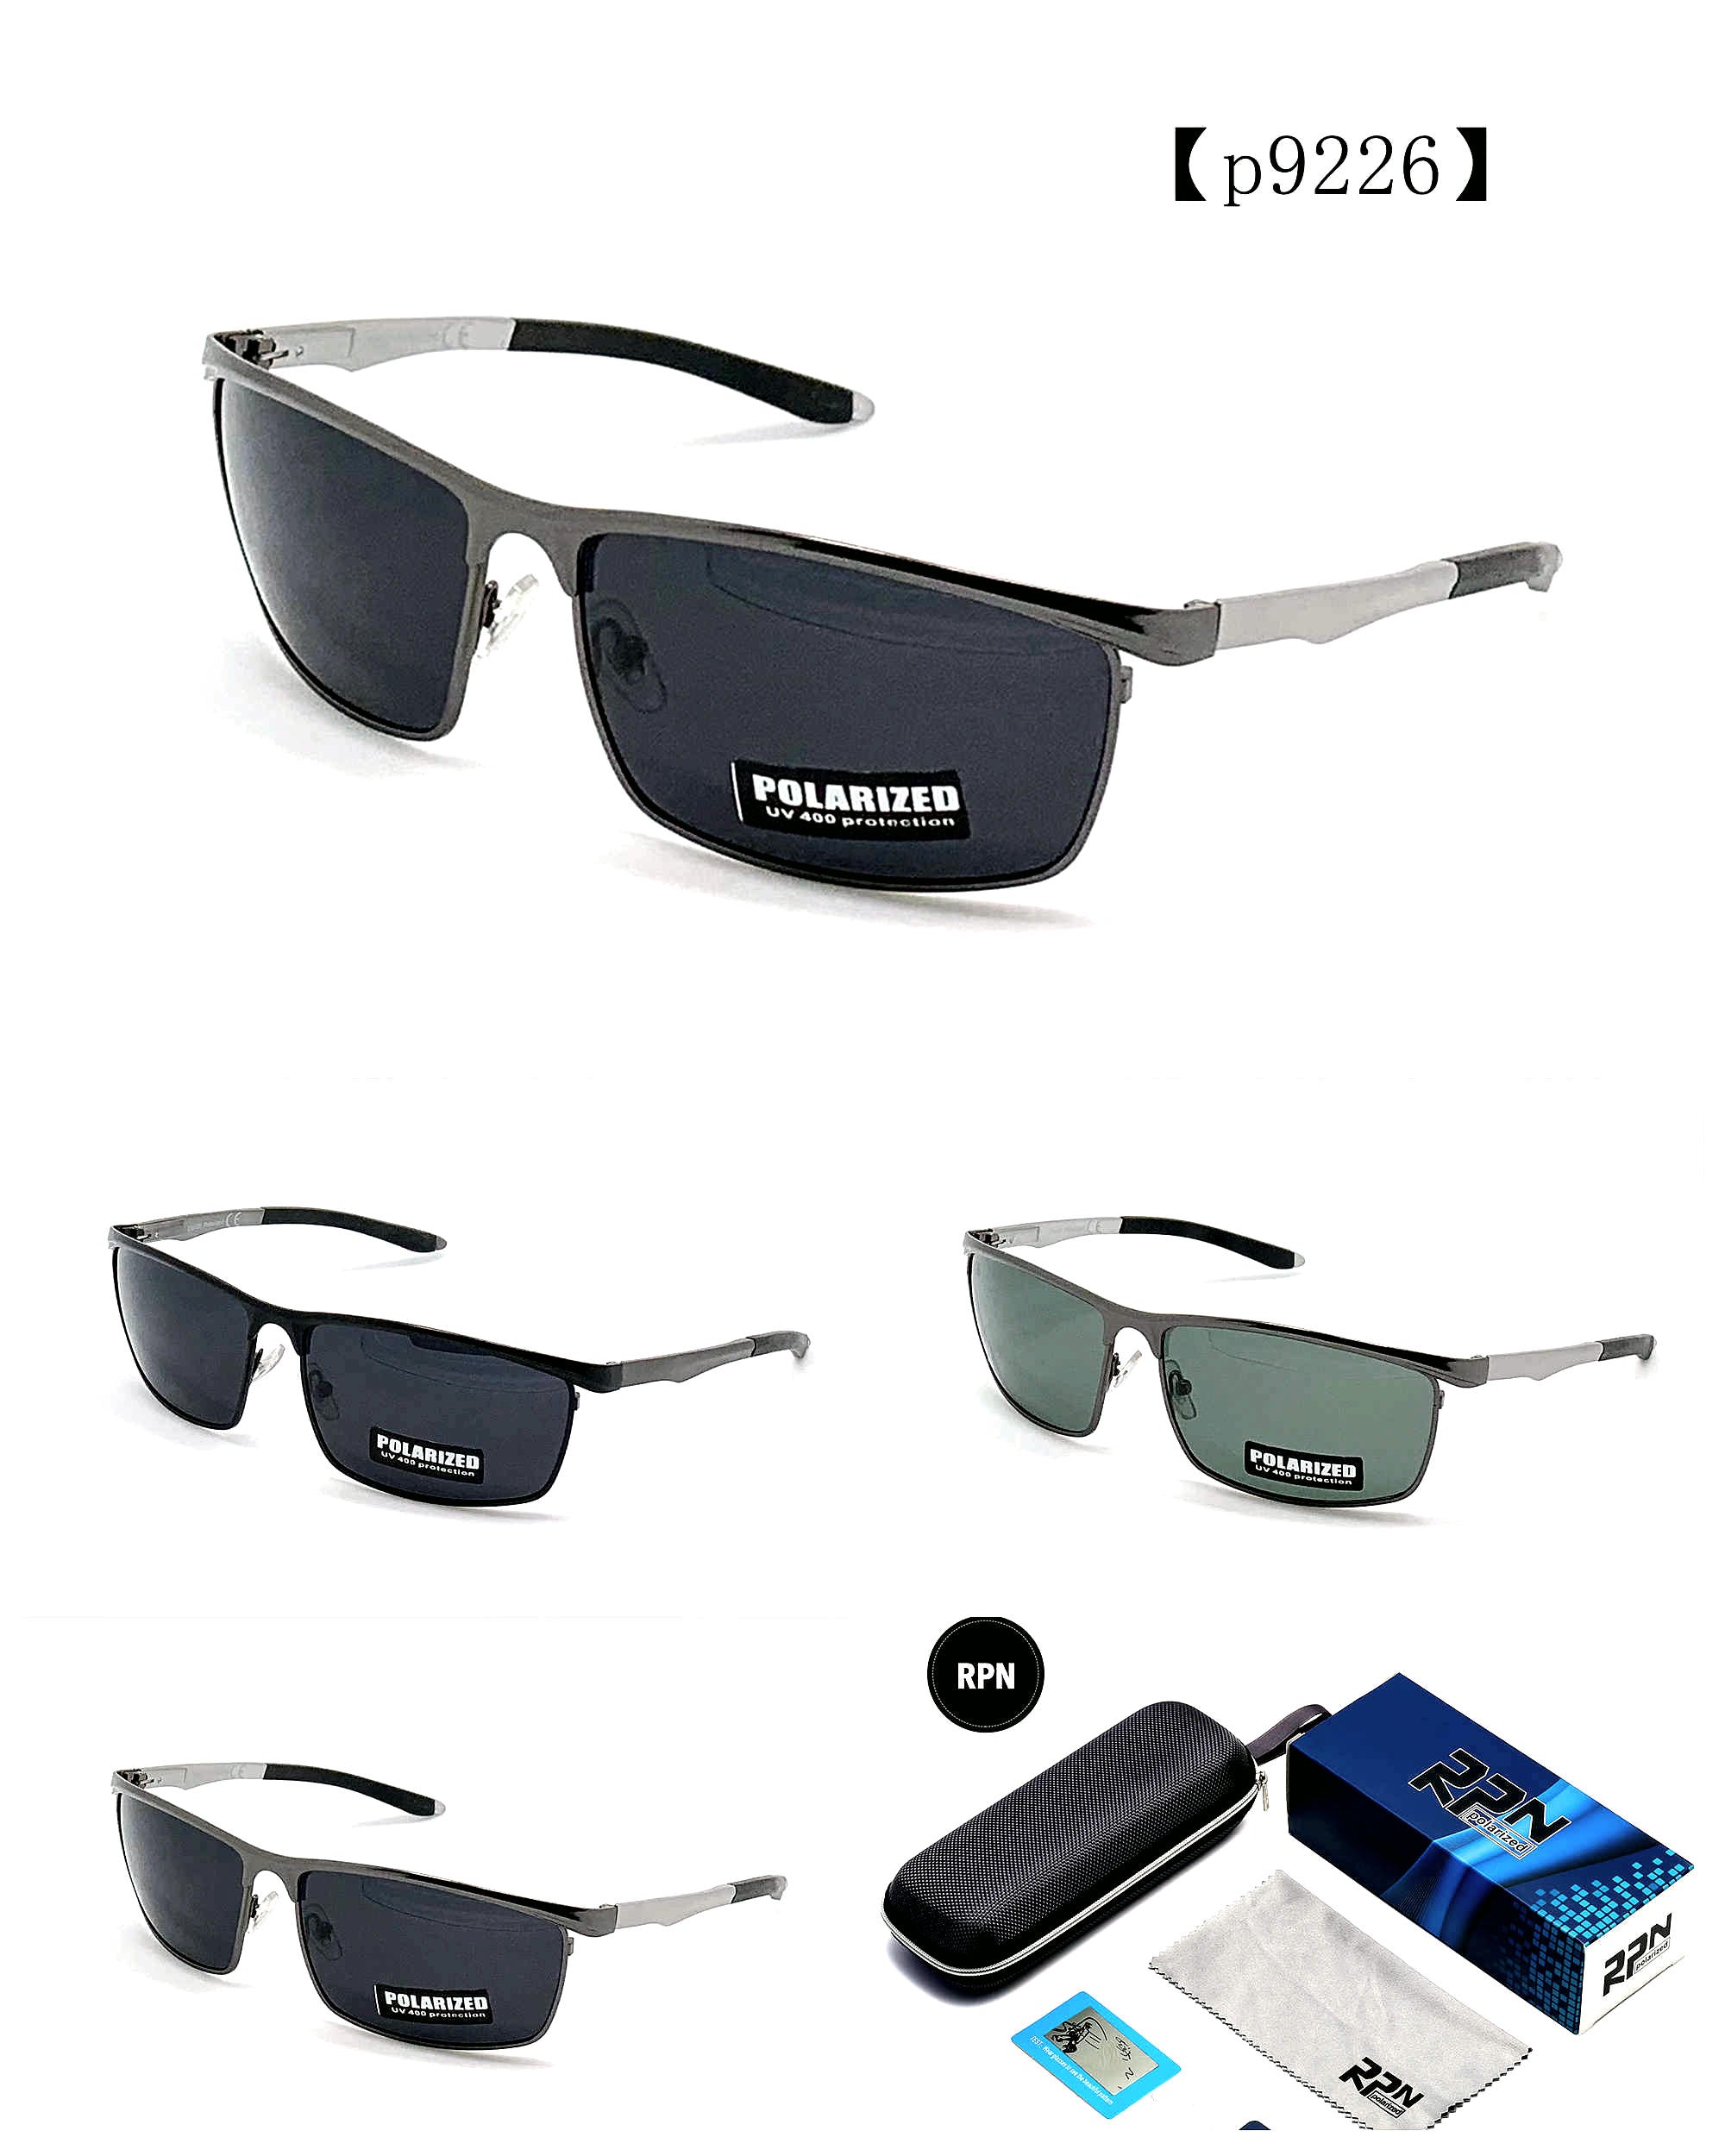 Men's Sunglasses Gencho RPN Polarized P9226 